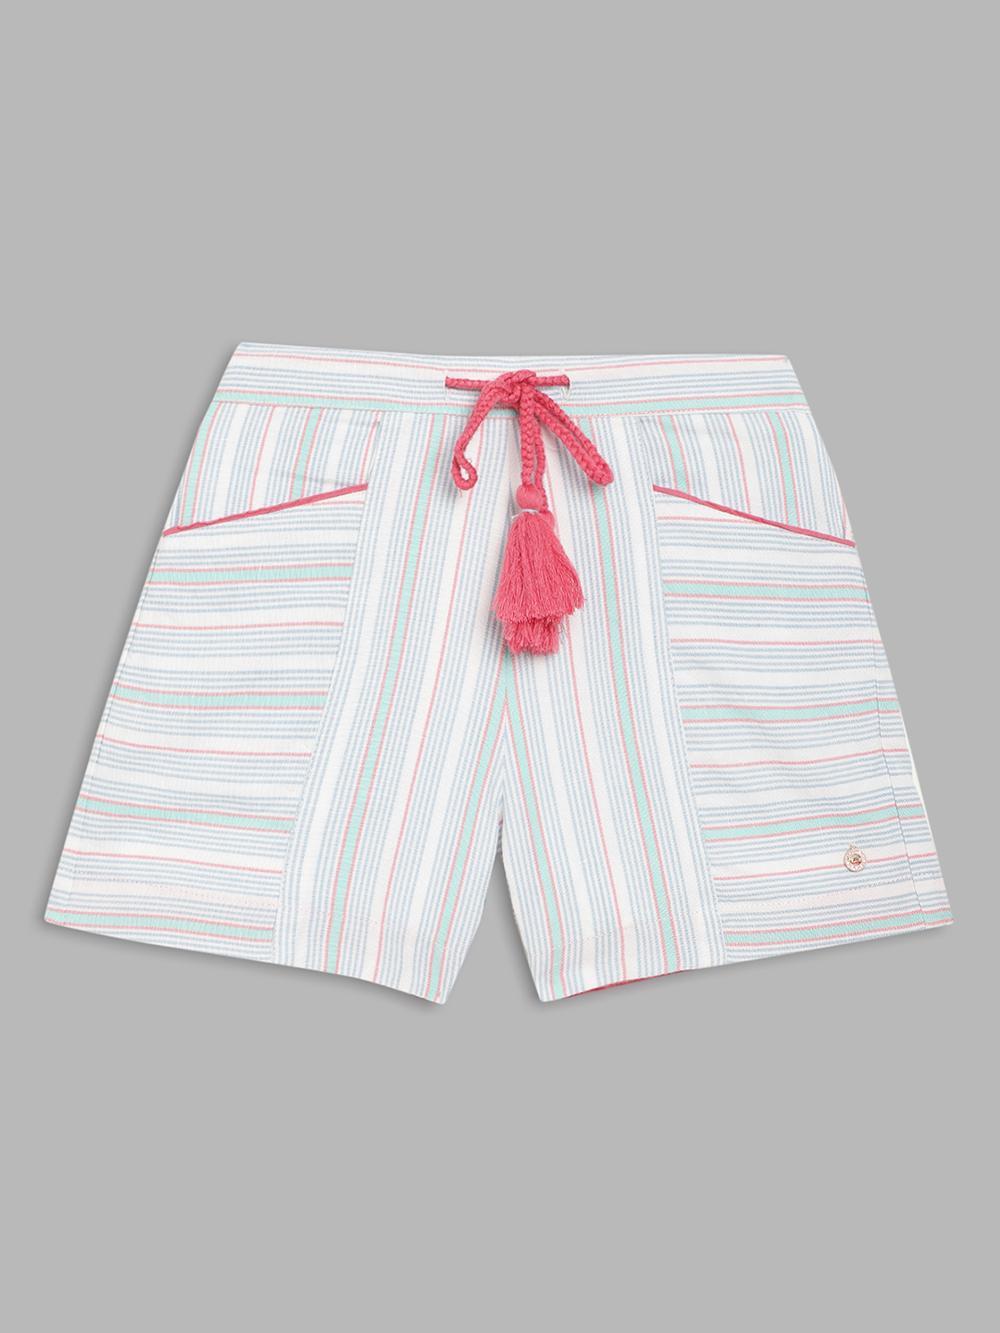 white striped regular fit shorts